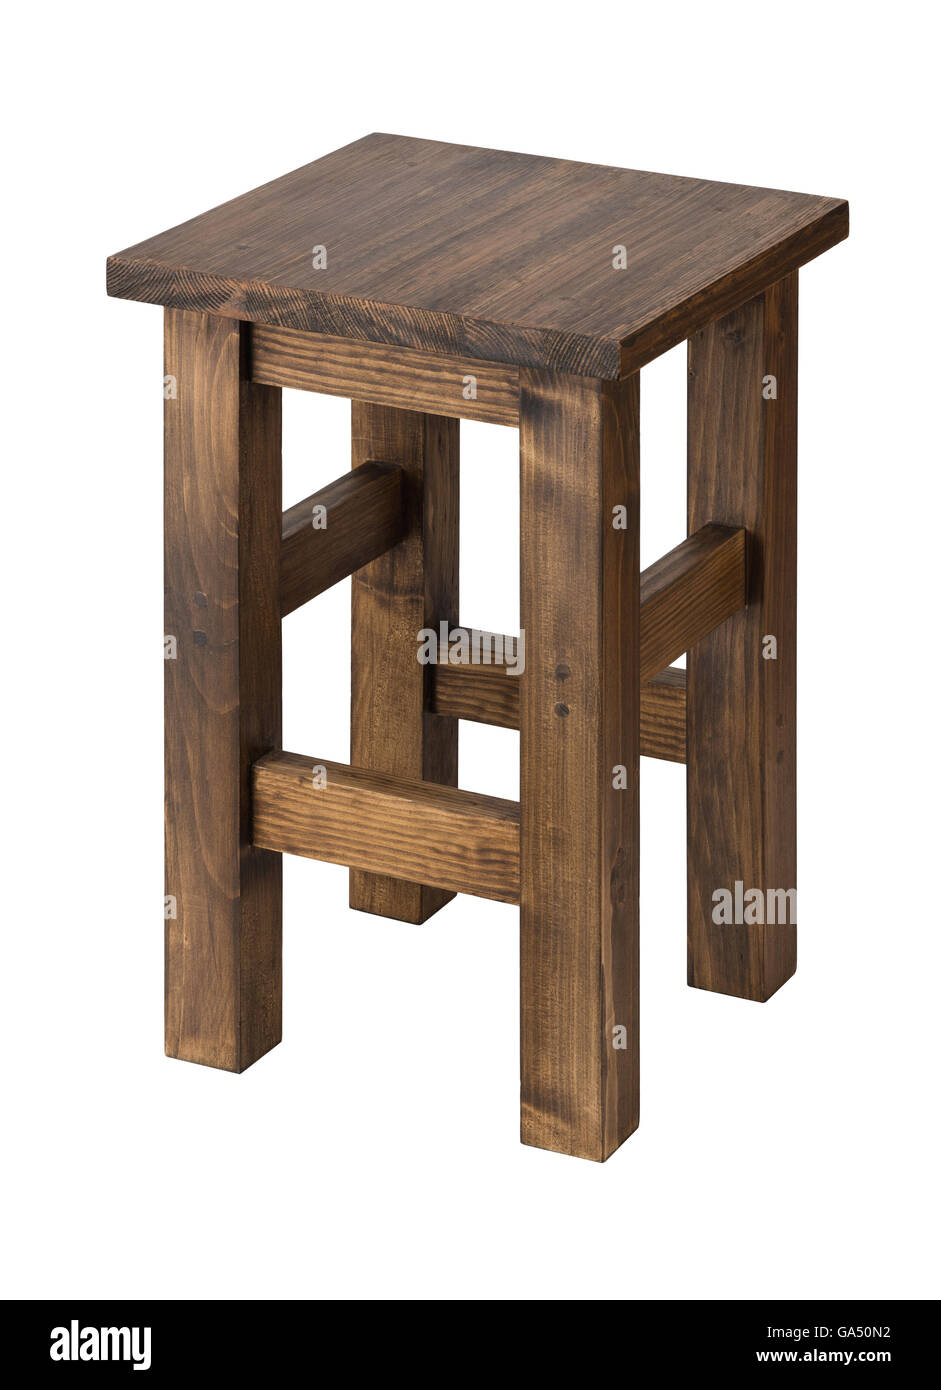 Wooden stool isolated on white background. Stock Photo